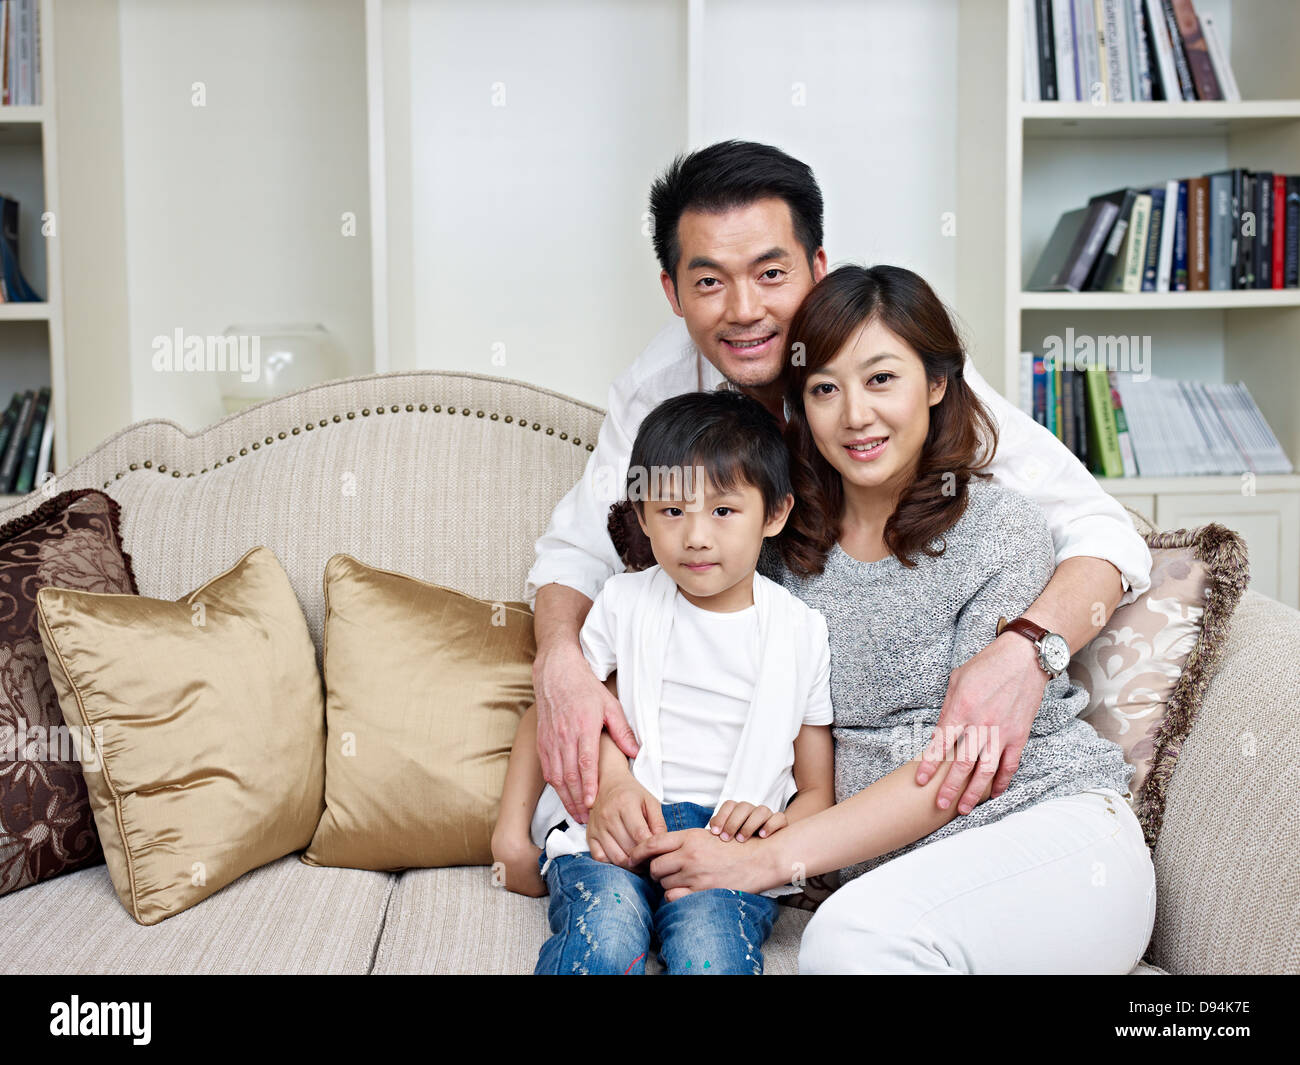 family photo Stock Photo